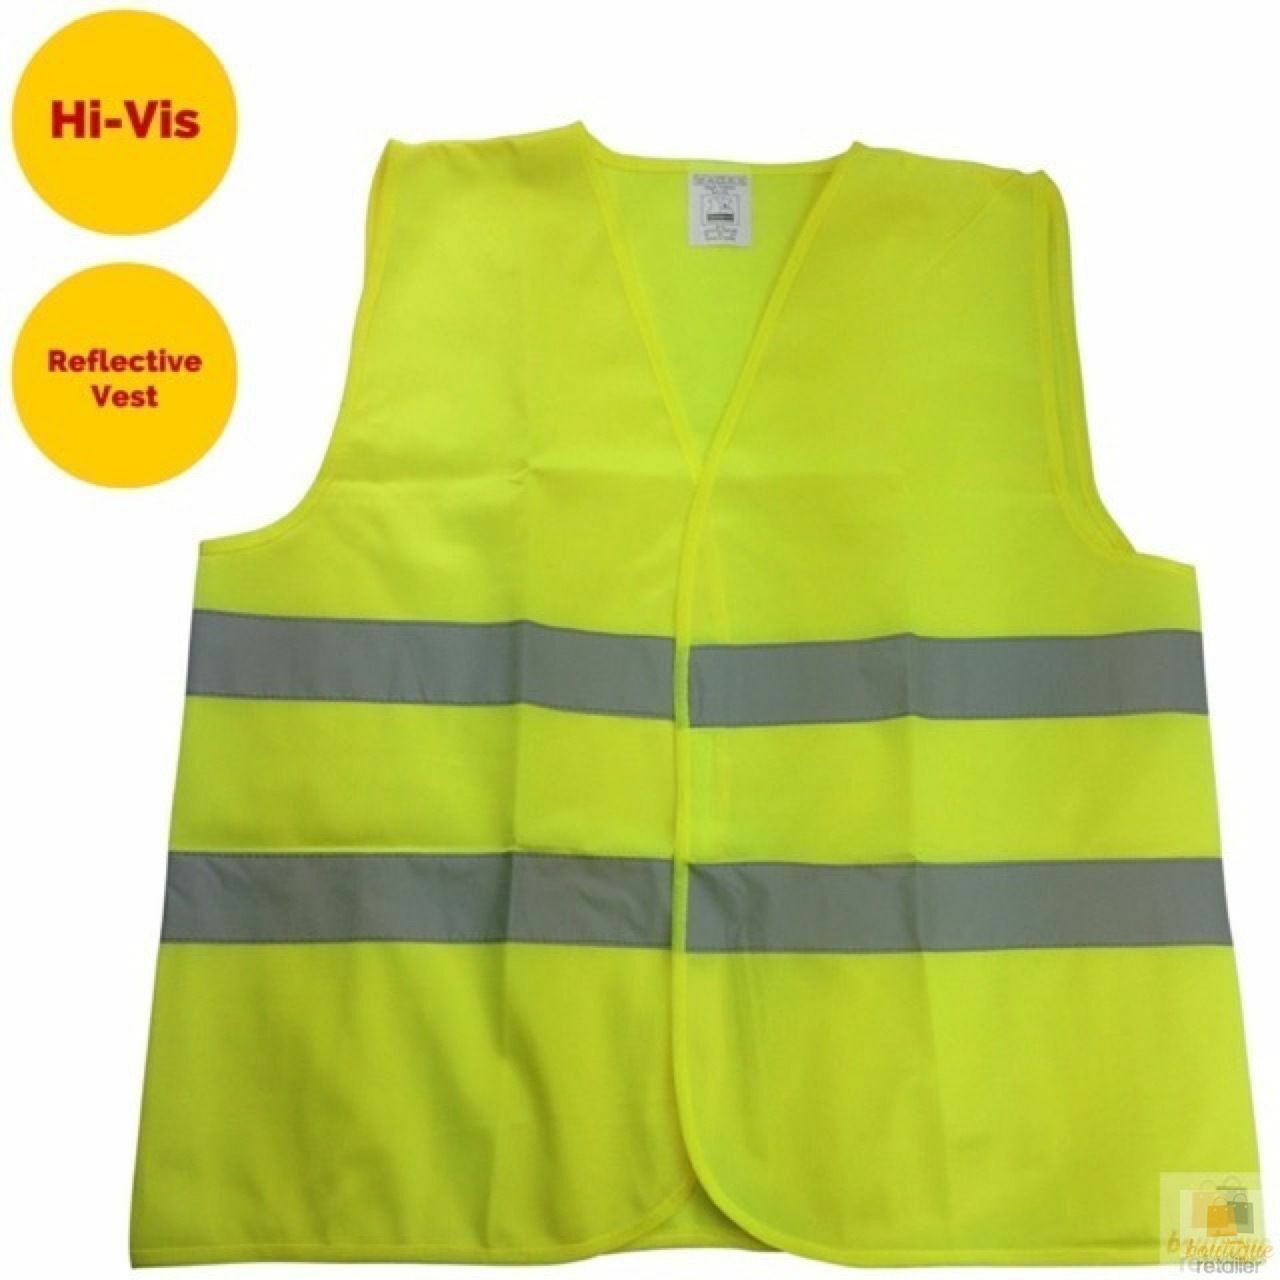 10x Hi Vis Safety VEST Reflective Tape Workwear Yellow ONE SIZE Night & Day BULK